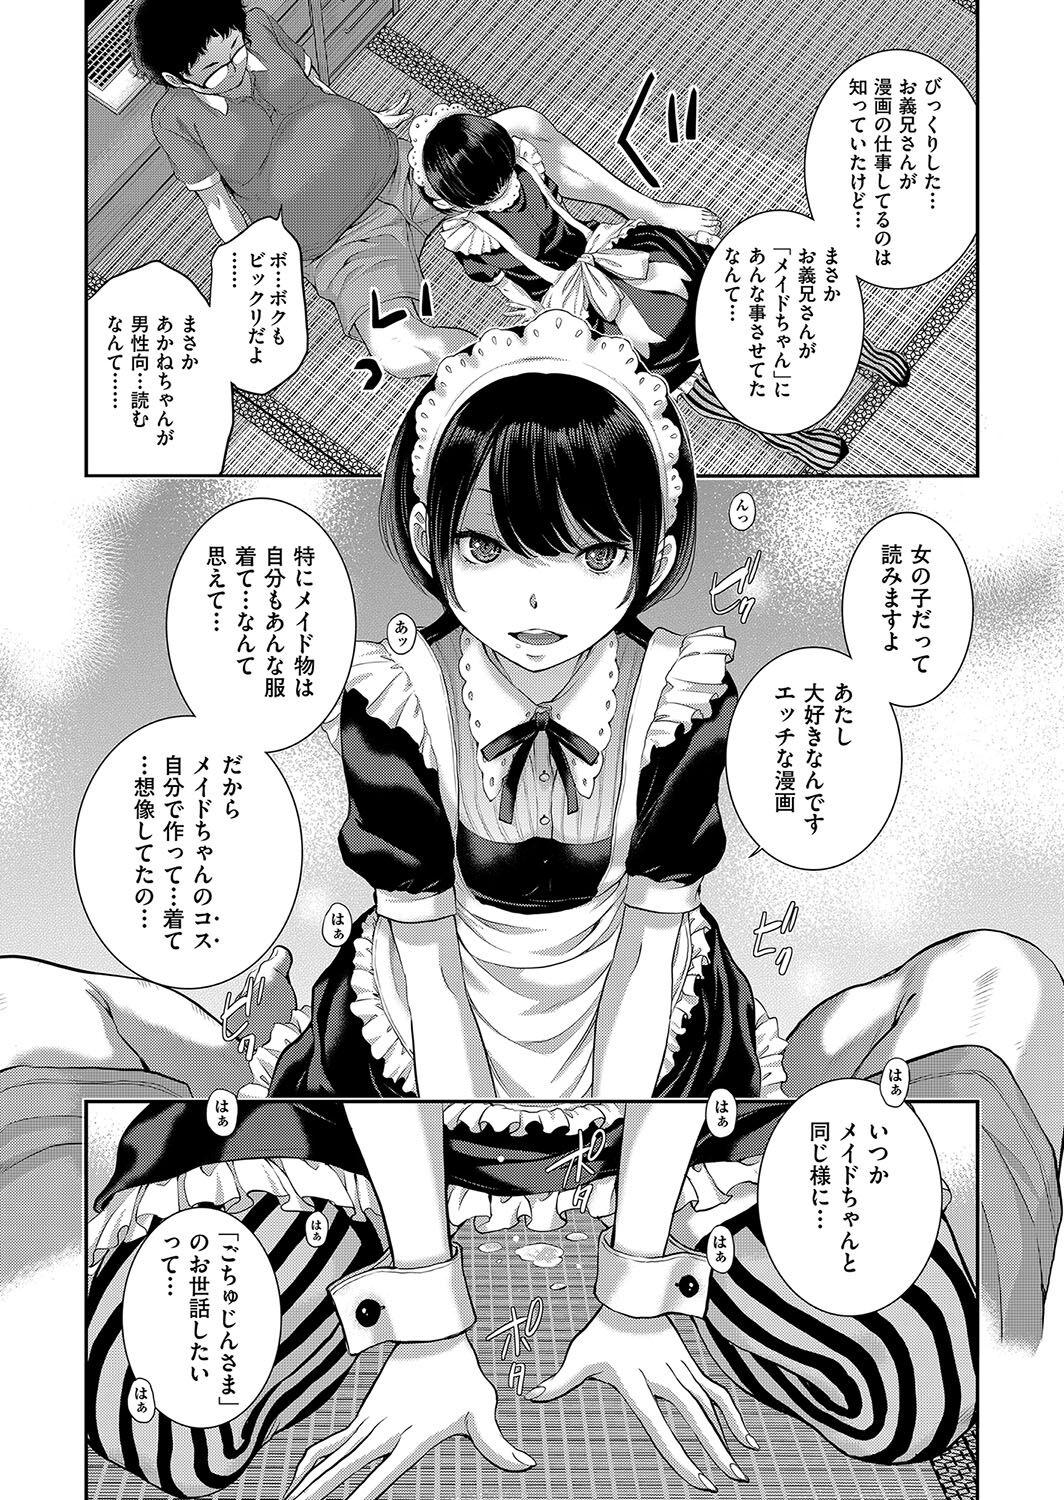 Maid Kitan - Maid Misteryous Story 15